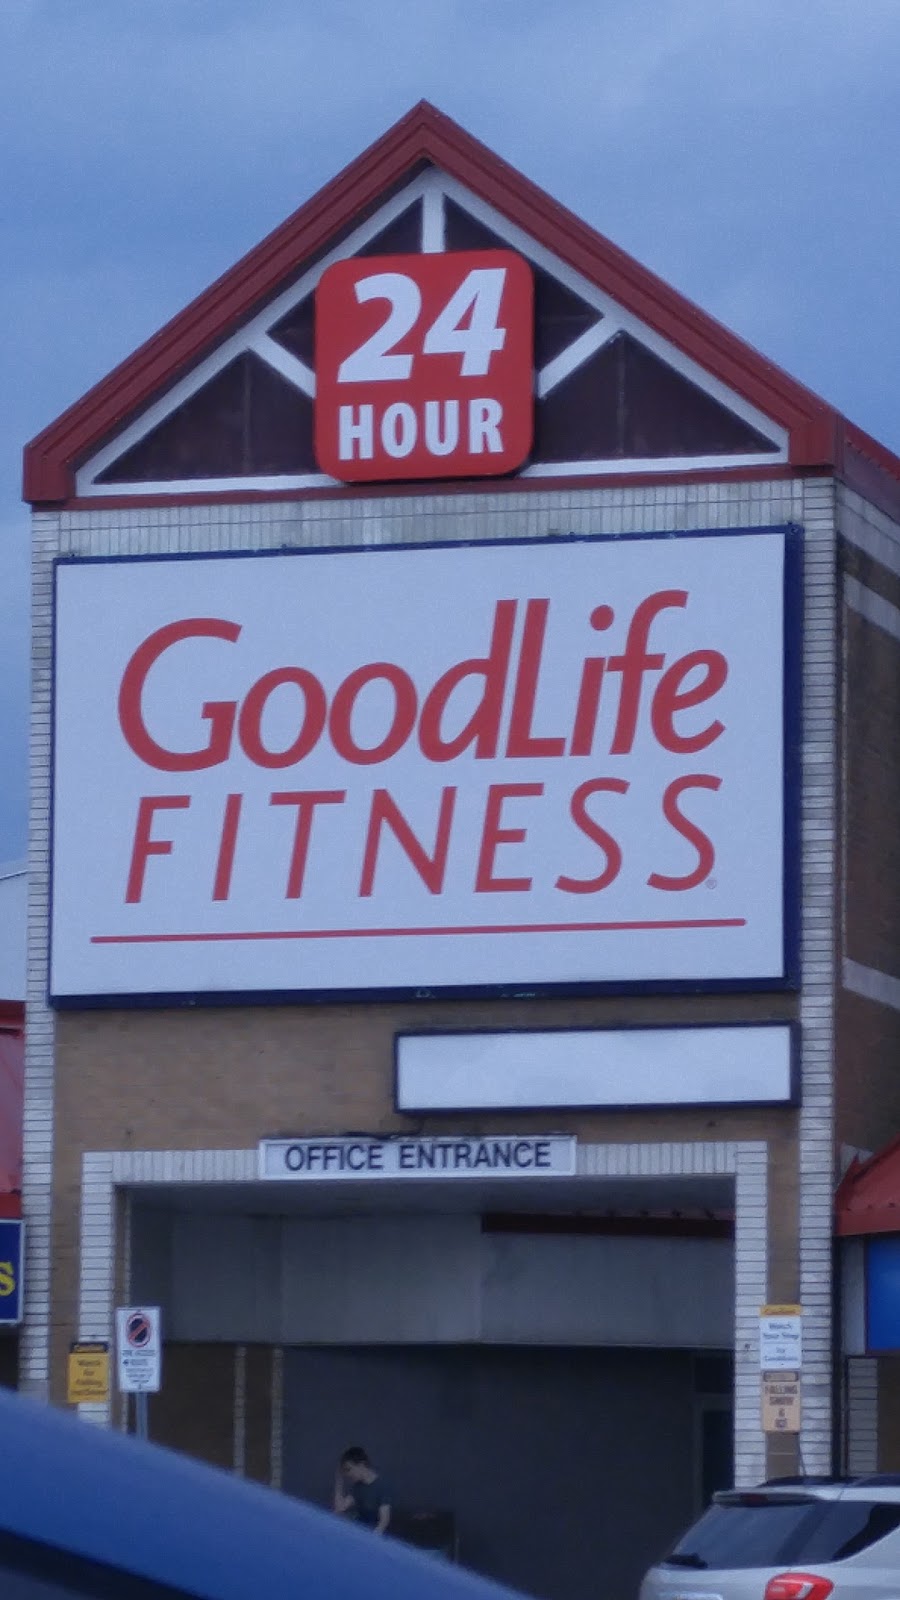 GoodLife Fitness Hamilton Upper James and Rymal | gym | 1550 Upper James St, Hamilton, ON L9B 2L6, Canada | 9053882725 OR +1 905-388-2725